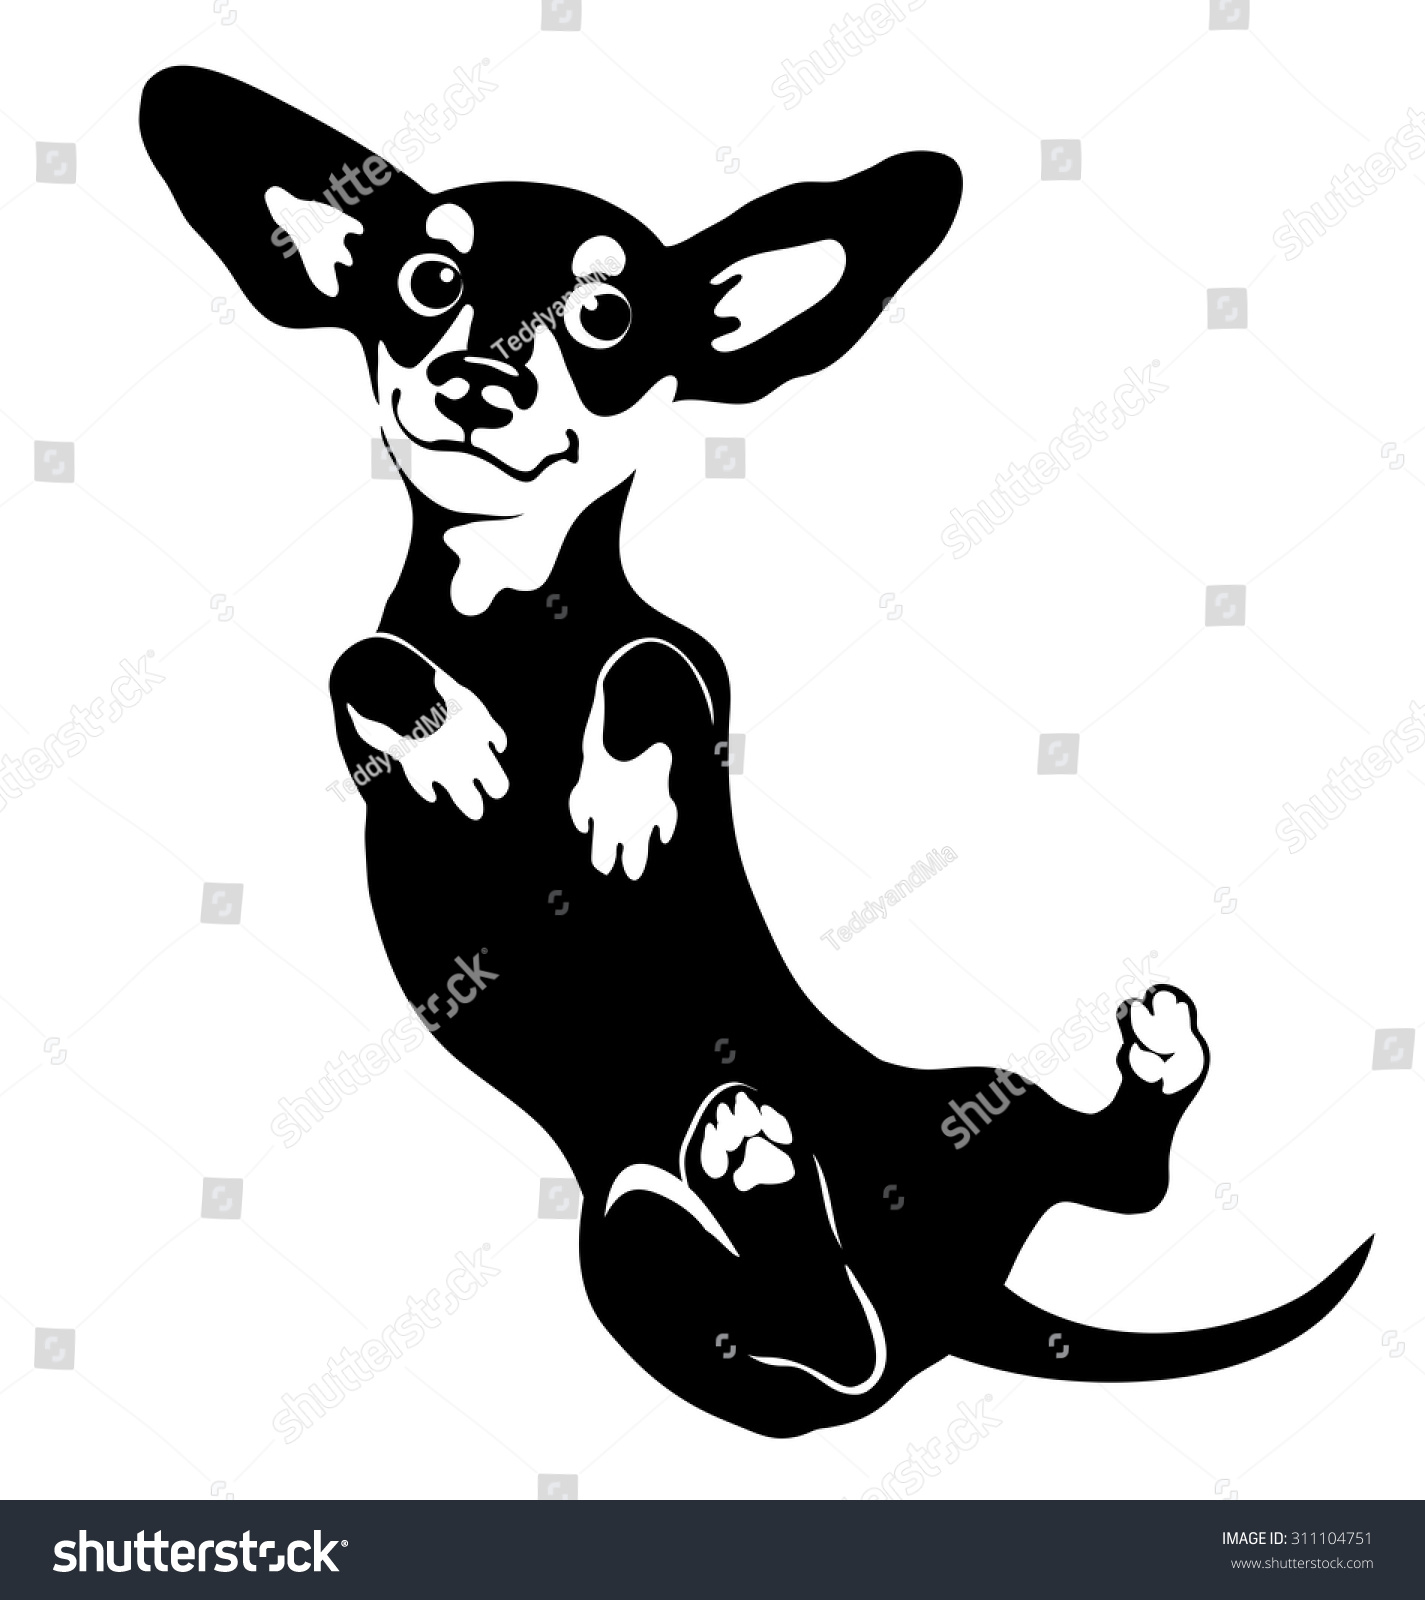 SVG of cartoon illustration of a dachshund dog svg